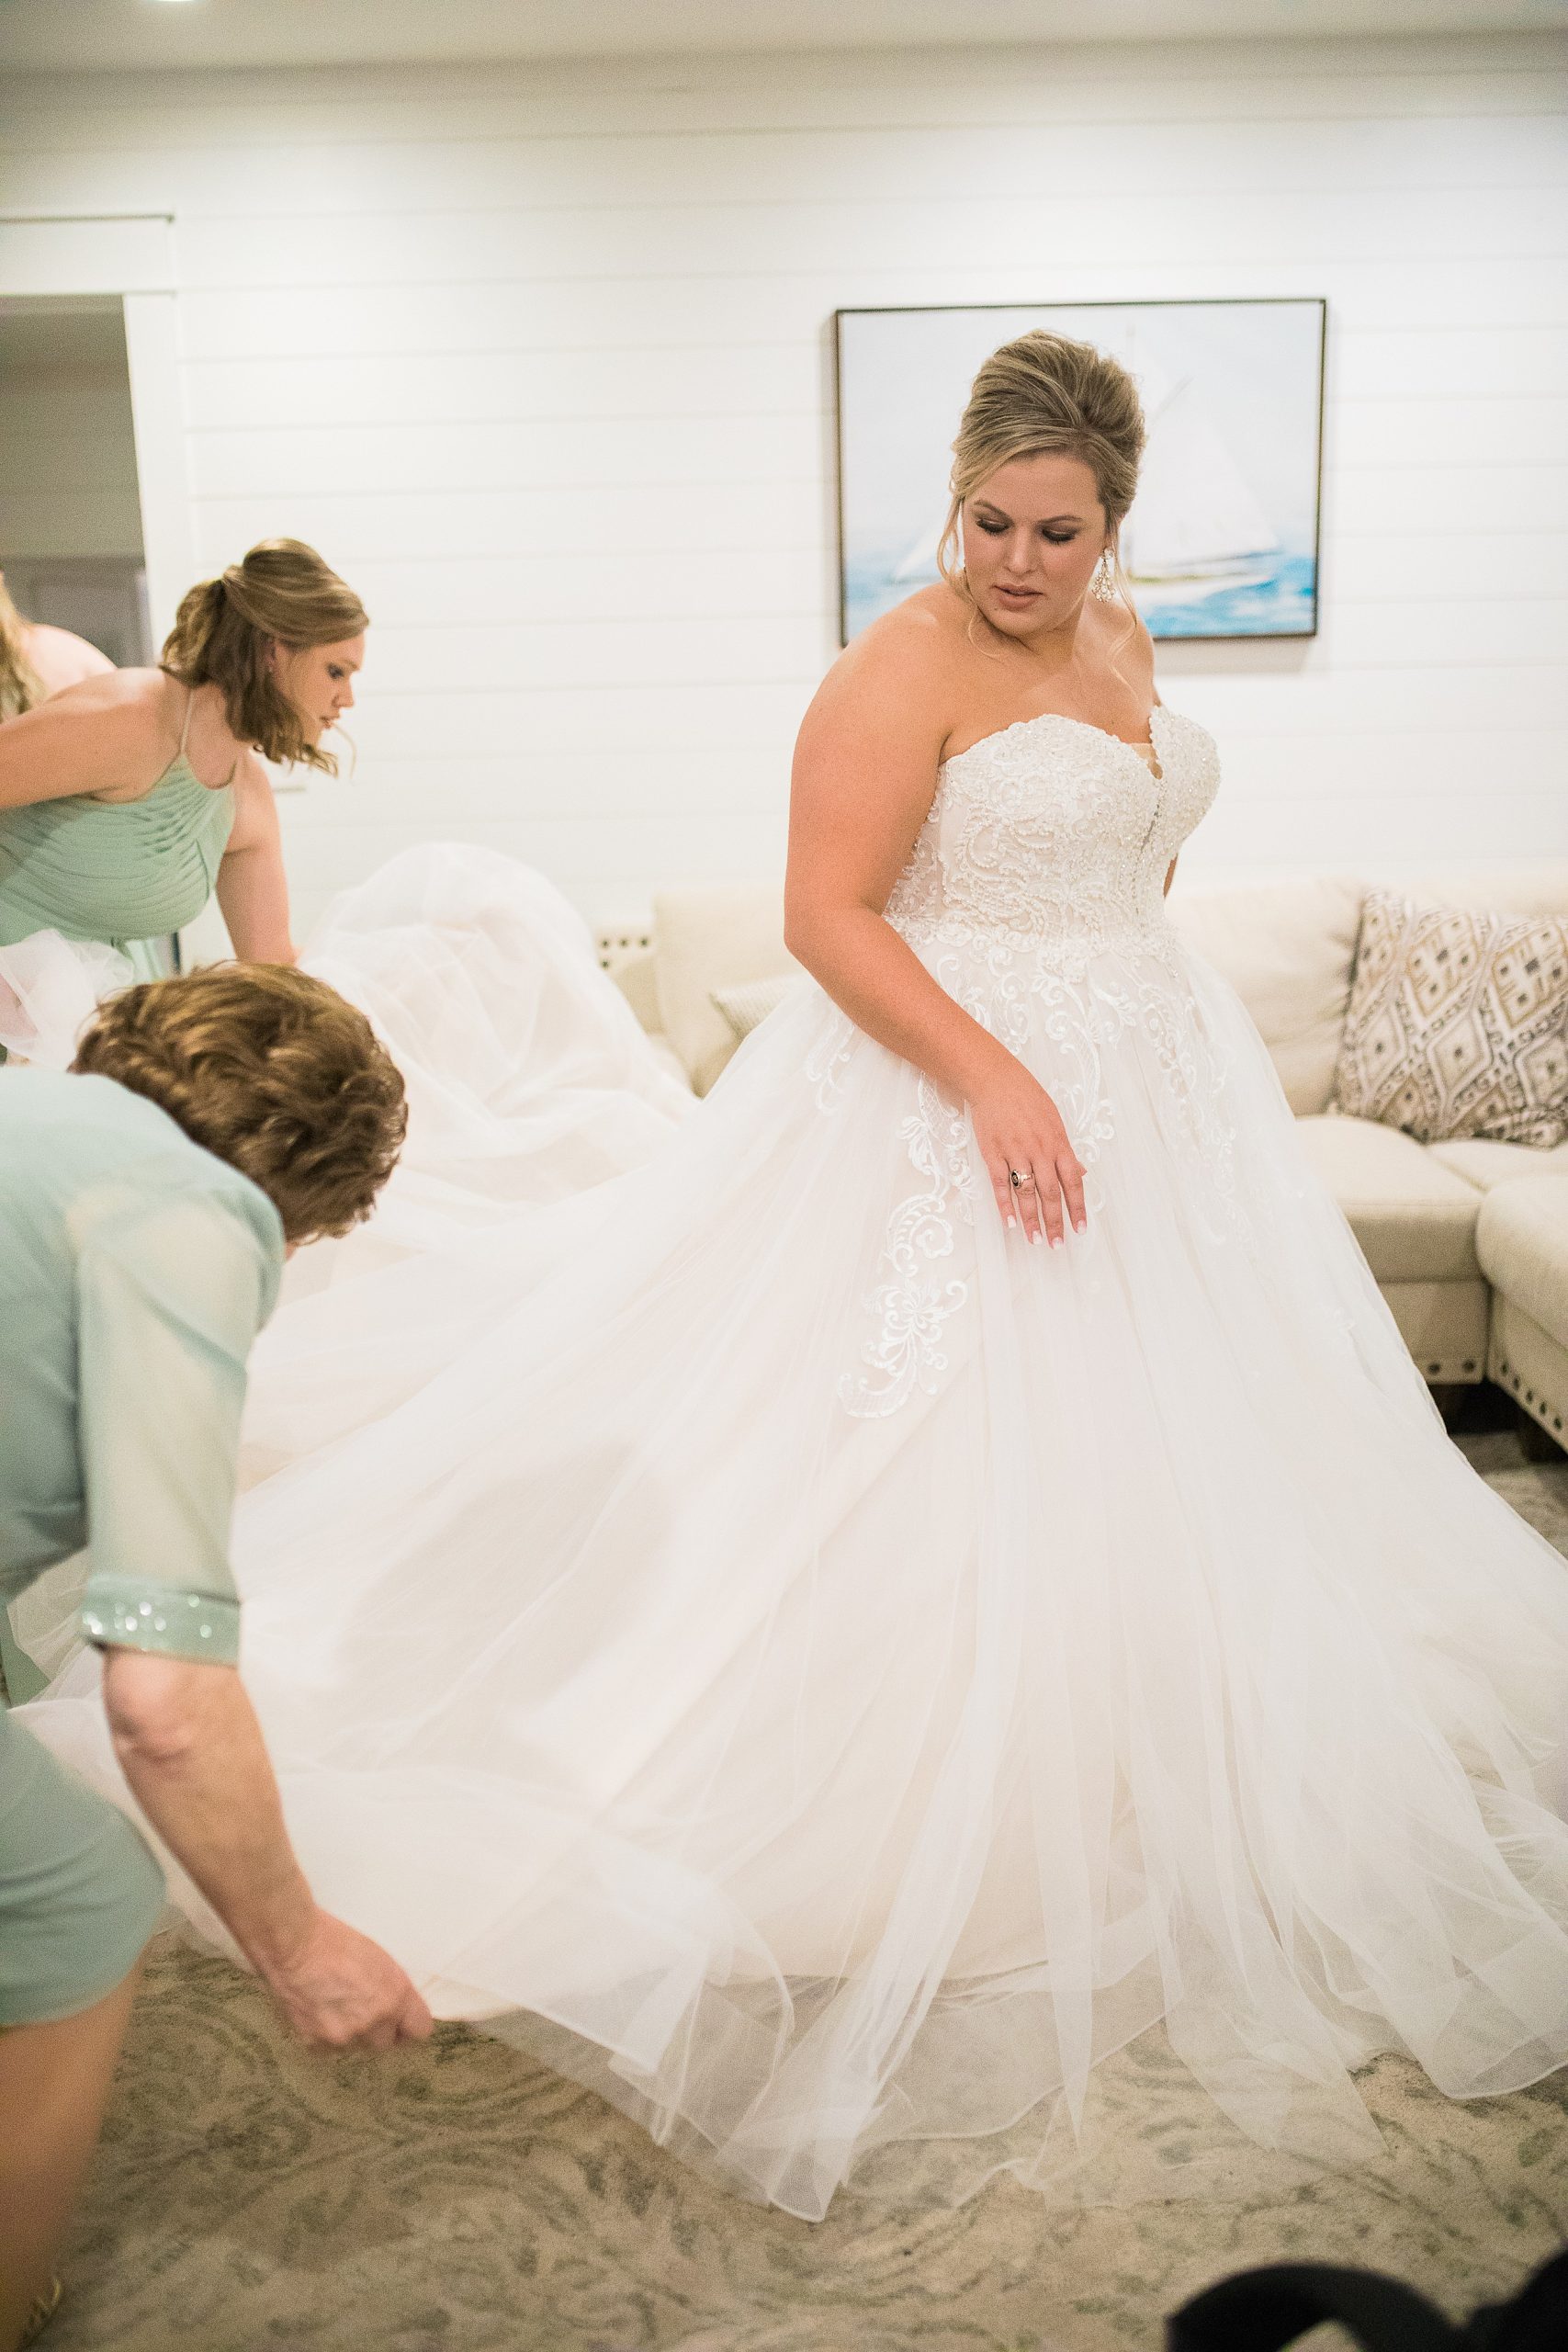 Clemson Wedding - Huguenot Loft Reception - Sarah + Jason